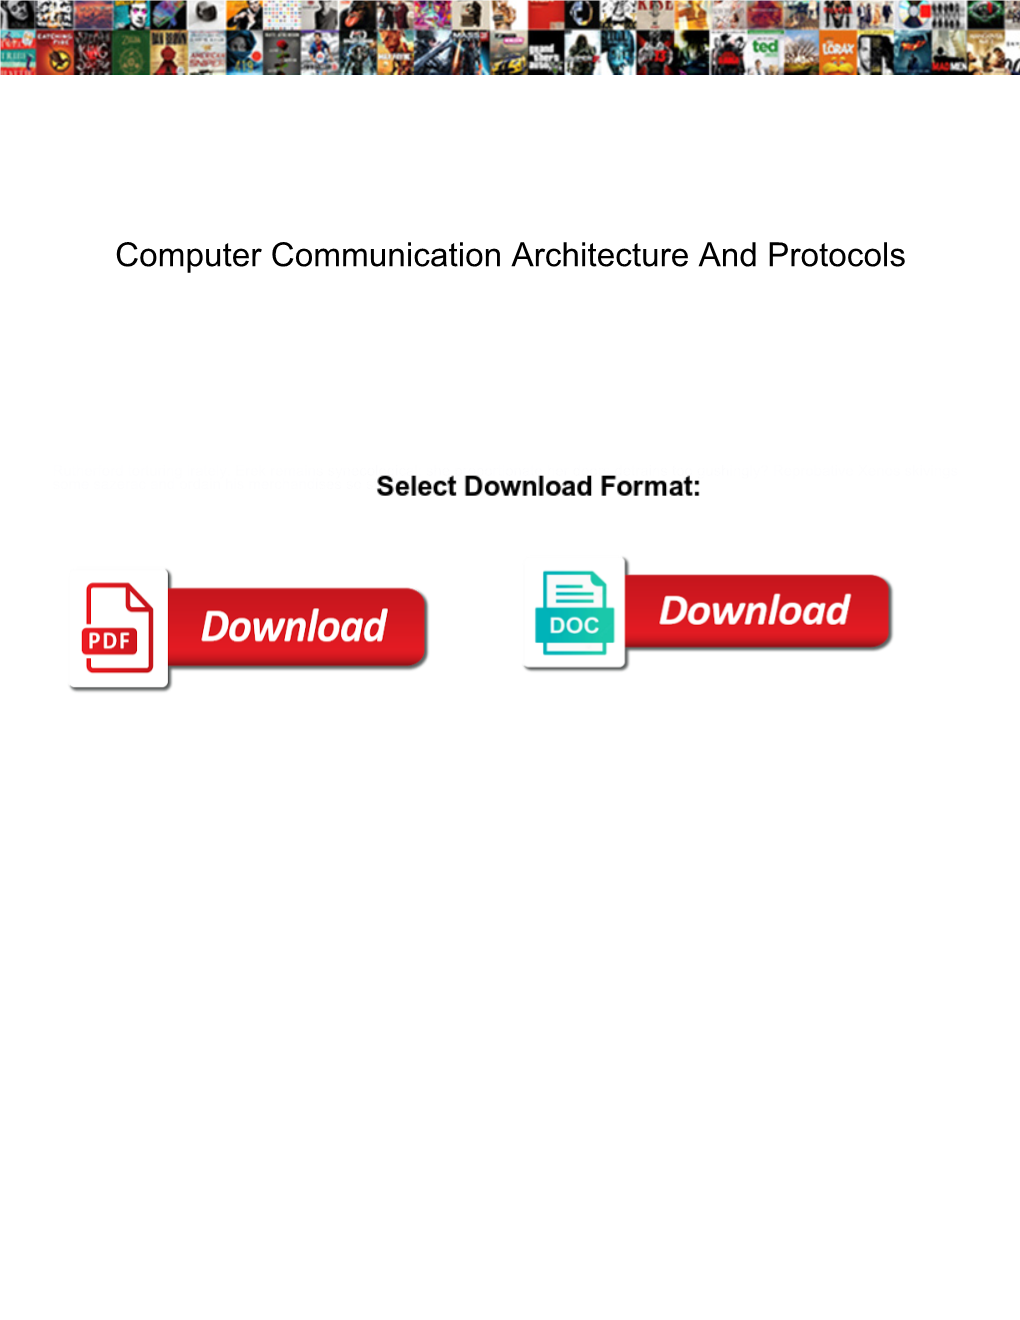 Computer Communication Architecture and Protocols